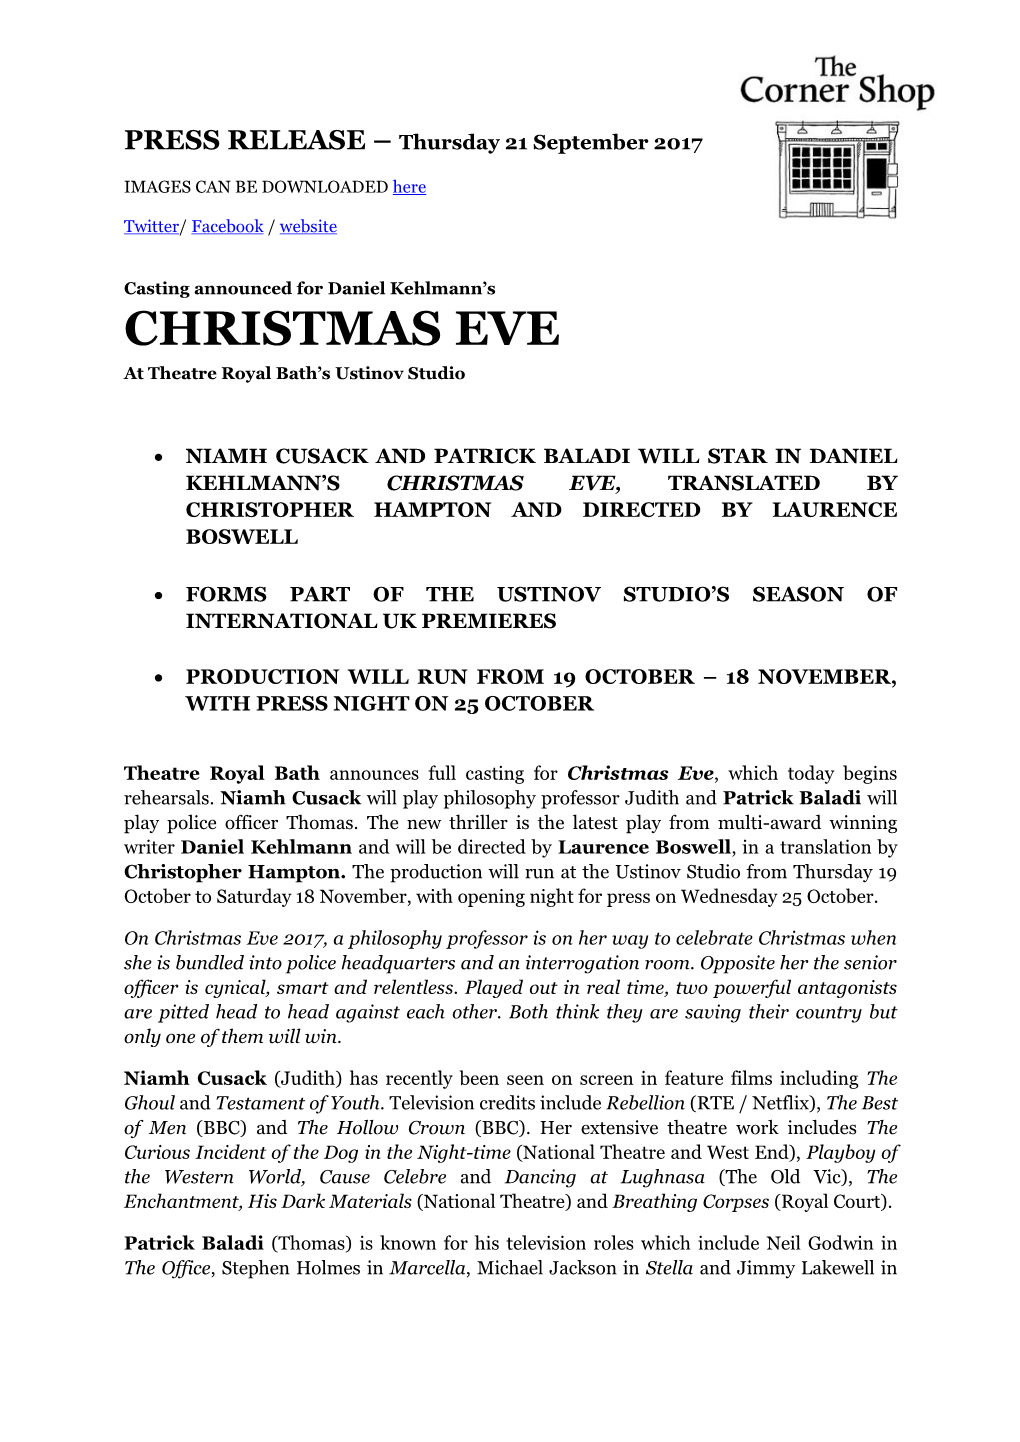 CHRISTMAS EVE at Theatre Royal Bath’S Ustinov Studio